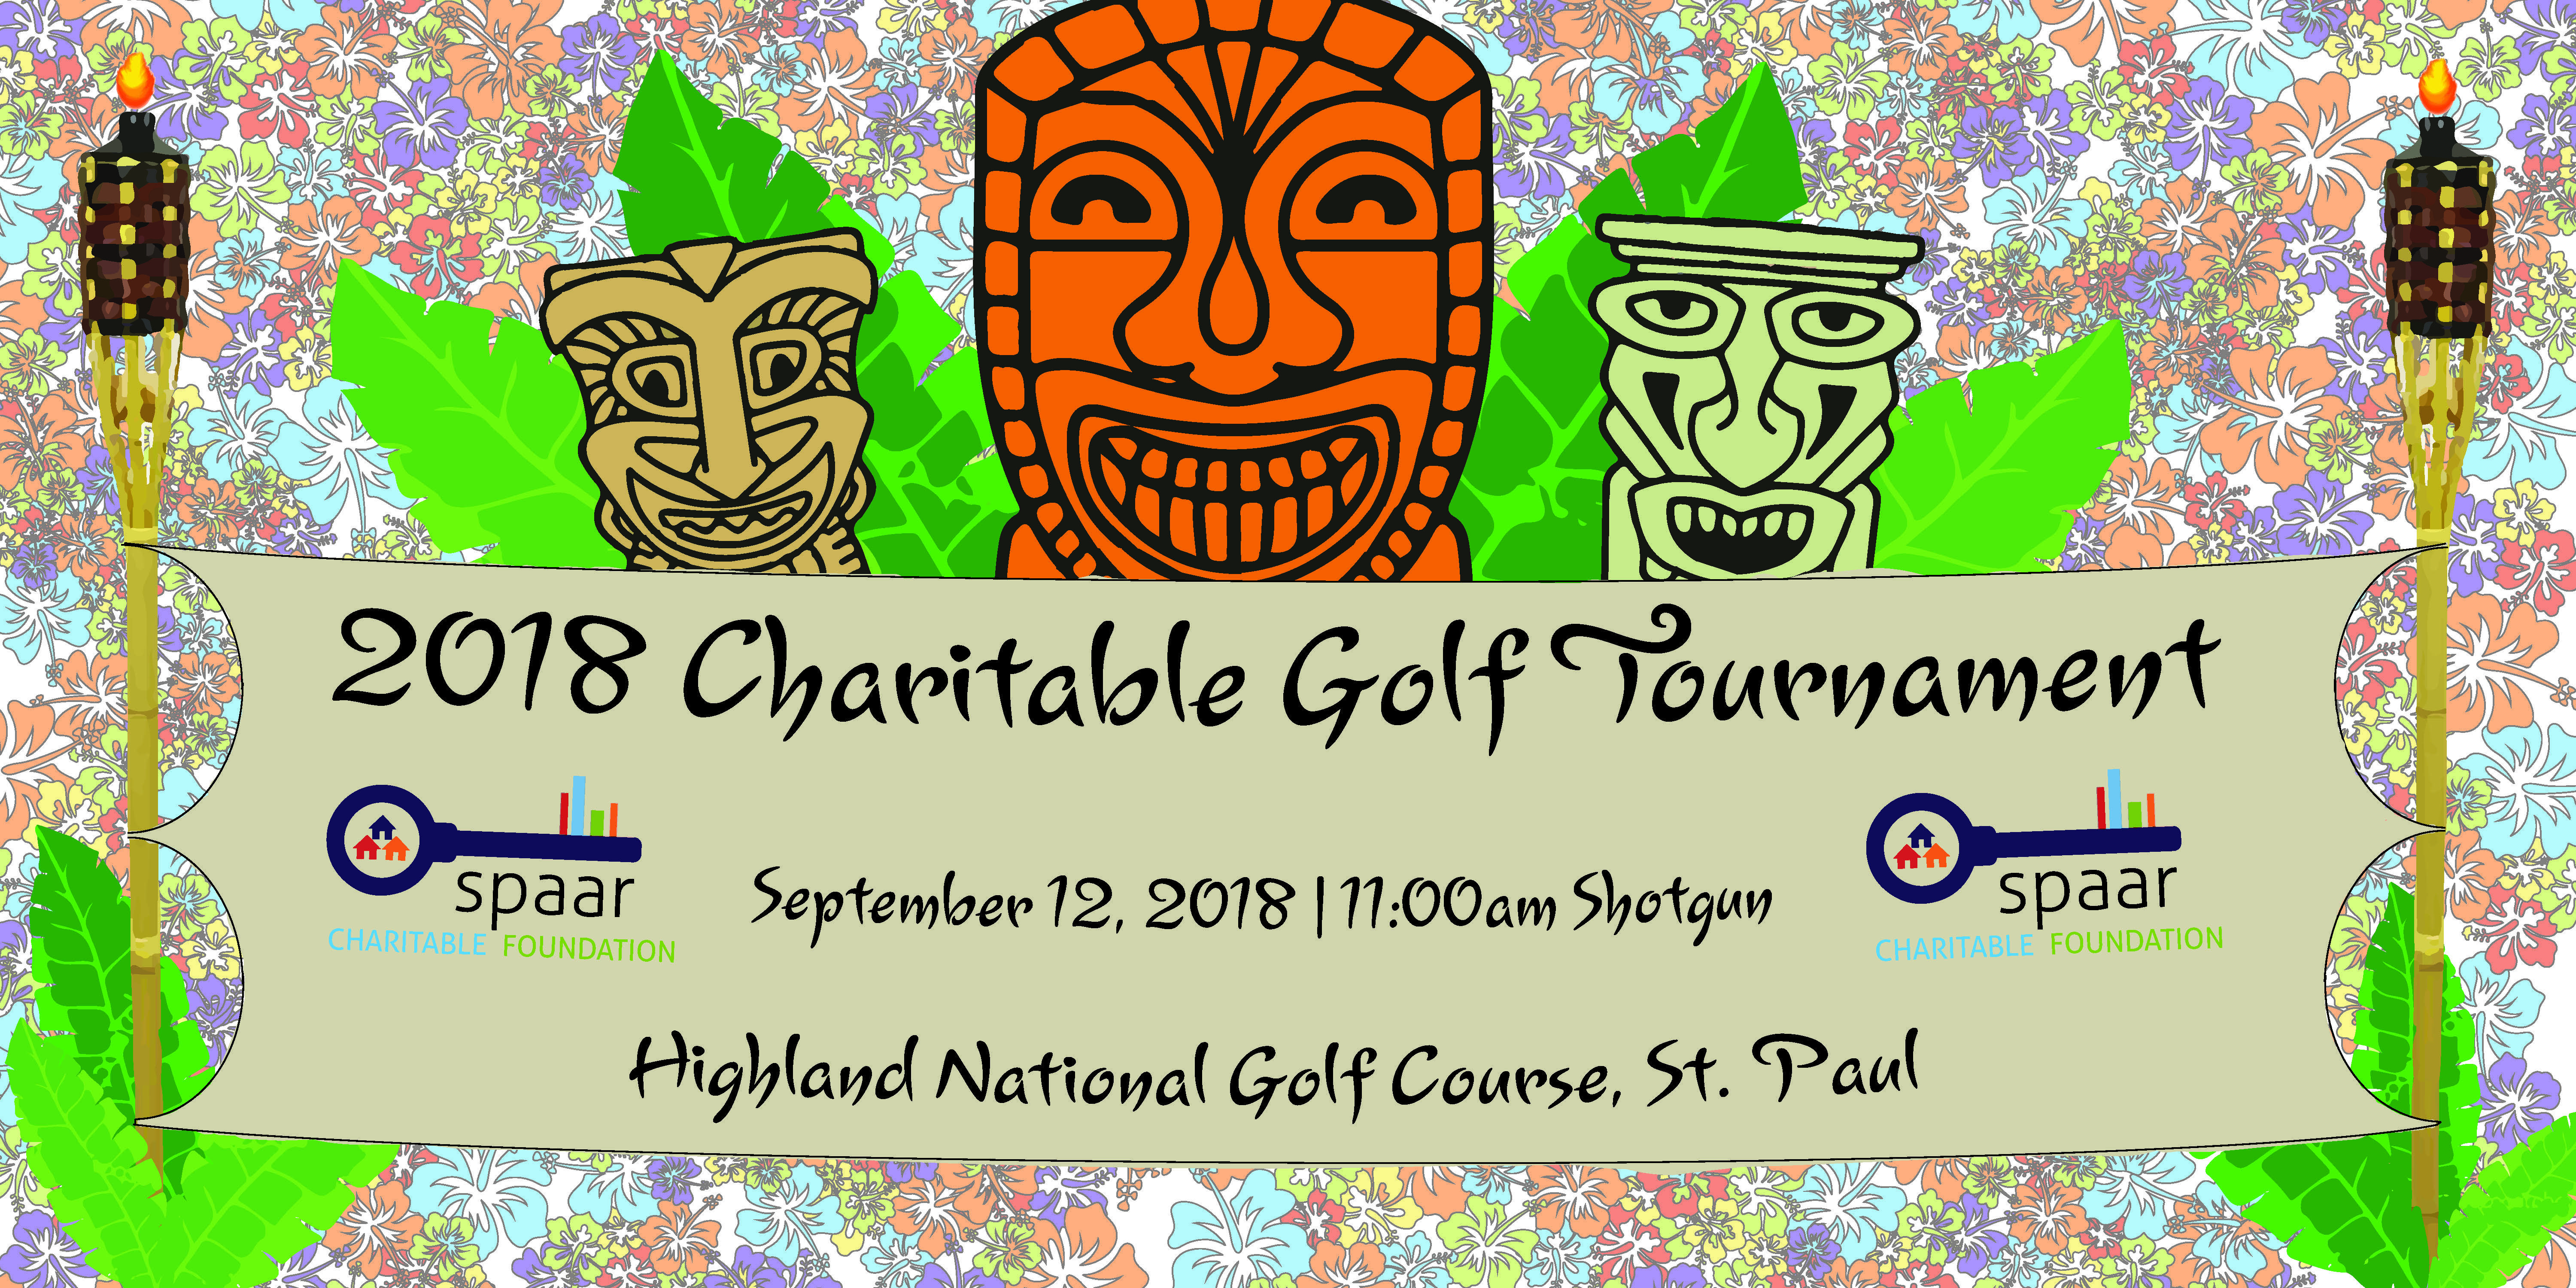 SPAAR Charitable Foundation Golf Tournament